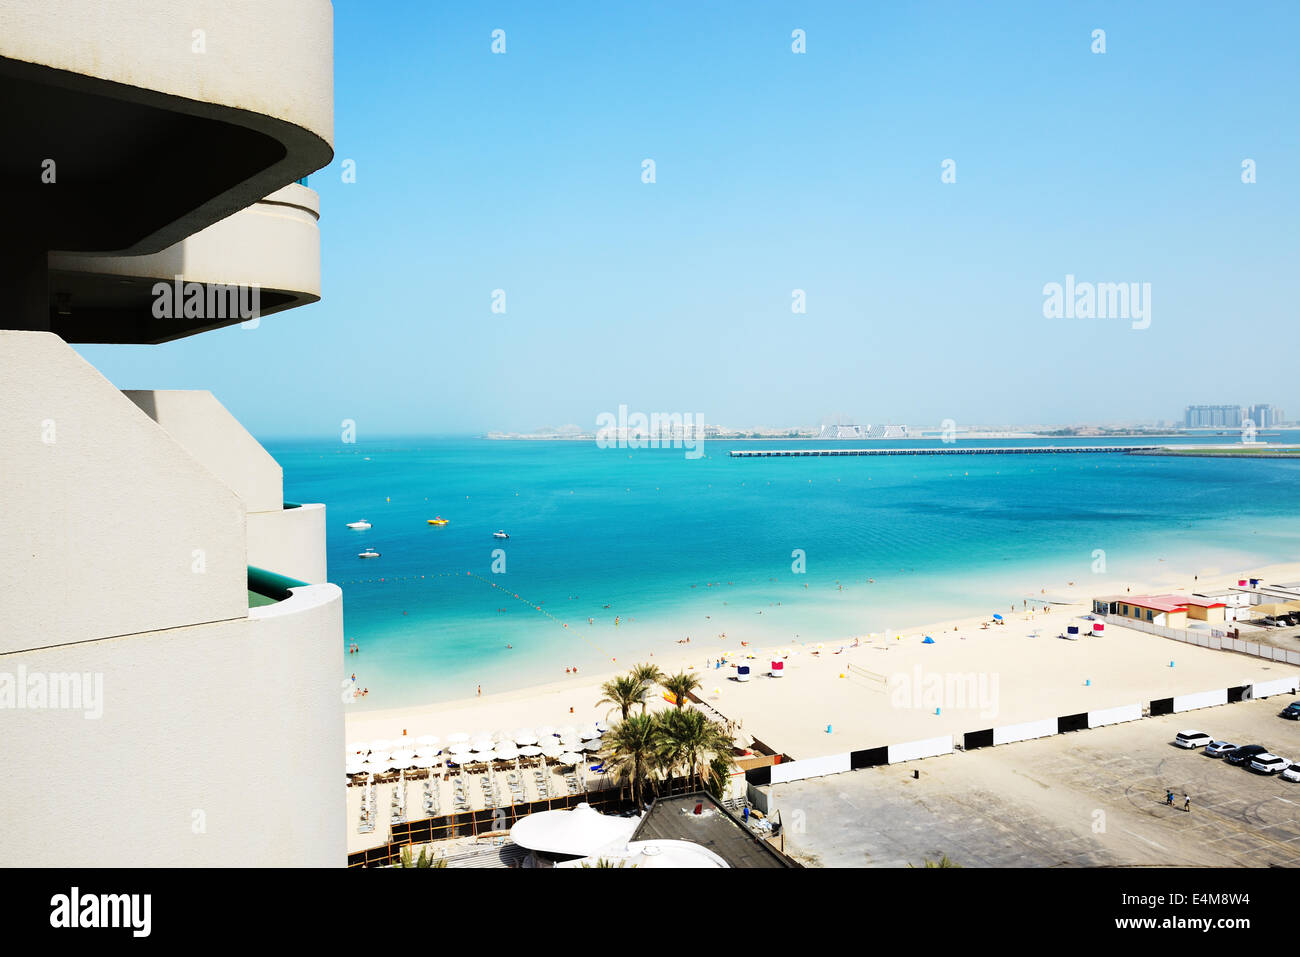 The view from balcony on beach and Jumeirah Palm man-made island, Dubai, UAE Stock Photo